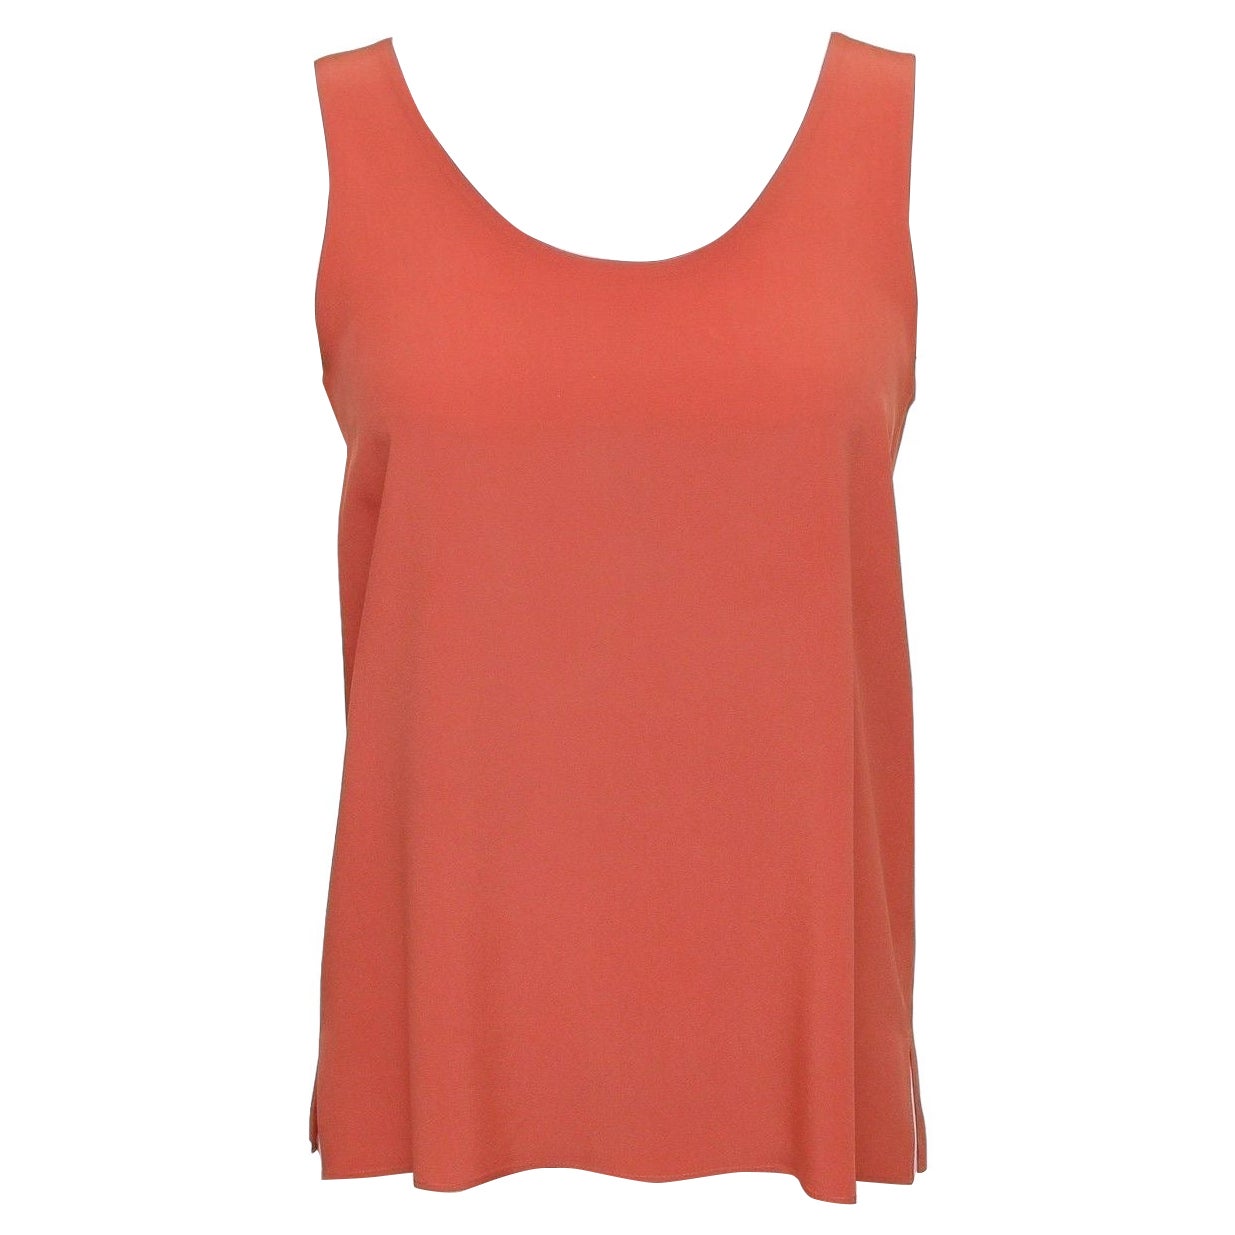 Chloe Orange Silk Sleeveless Blouse Top Dress Shirt 34 12S For Sale